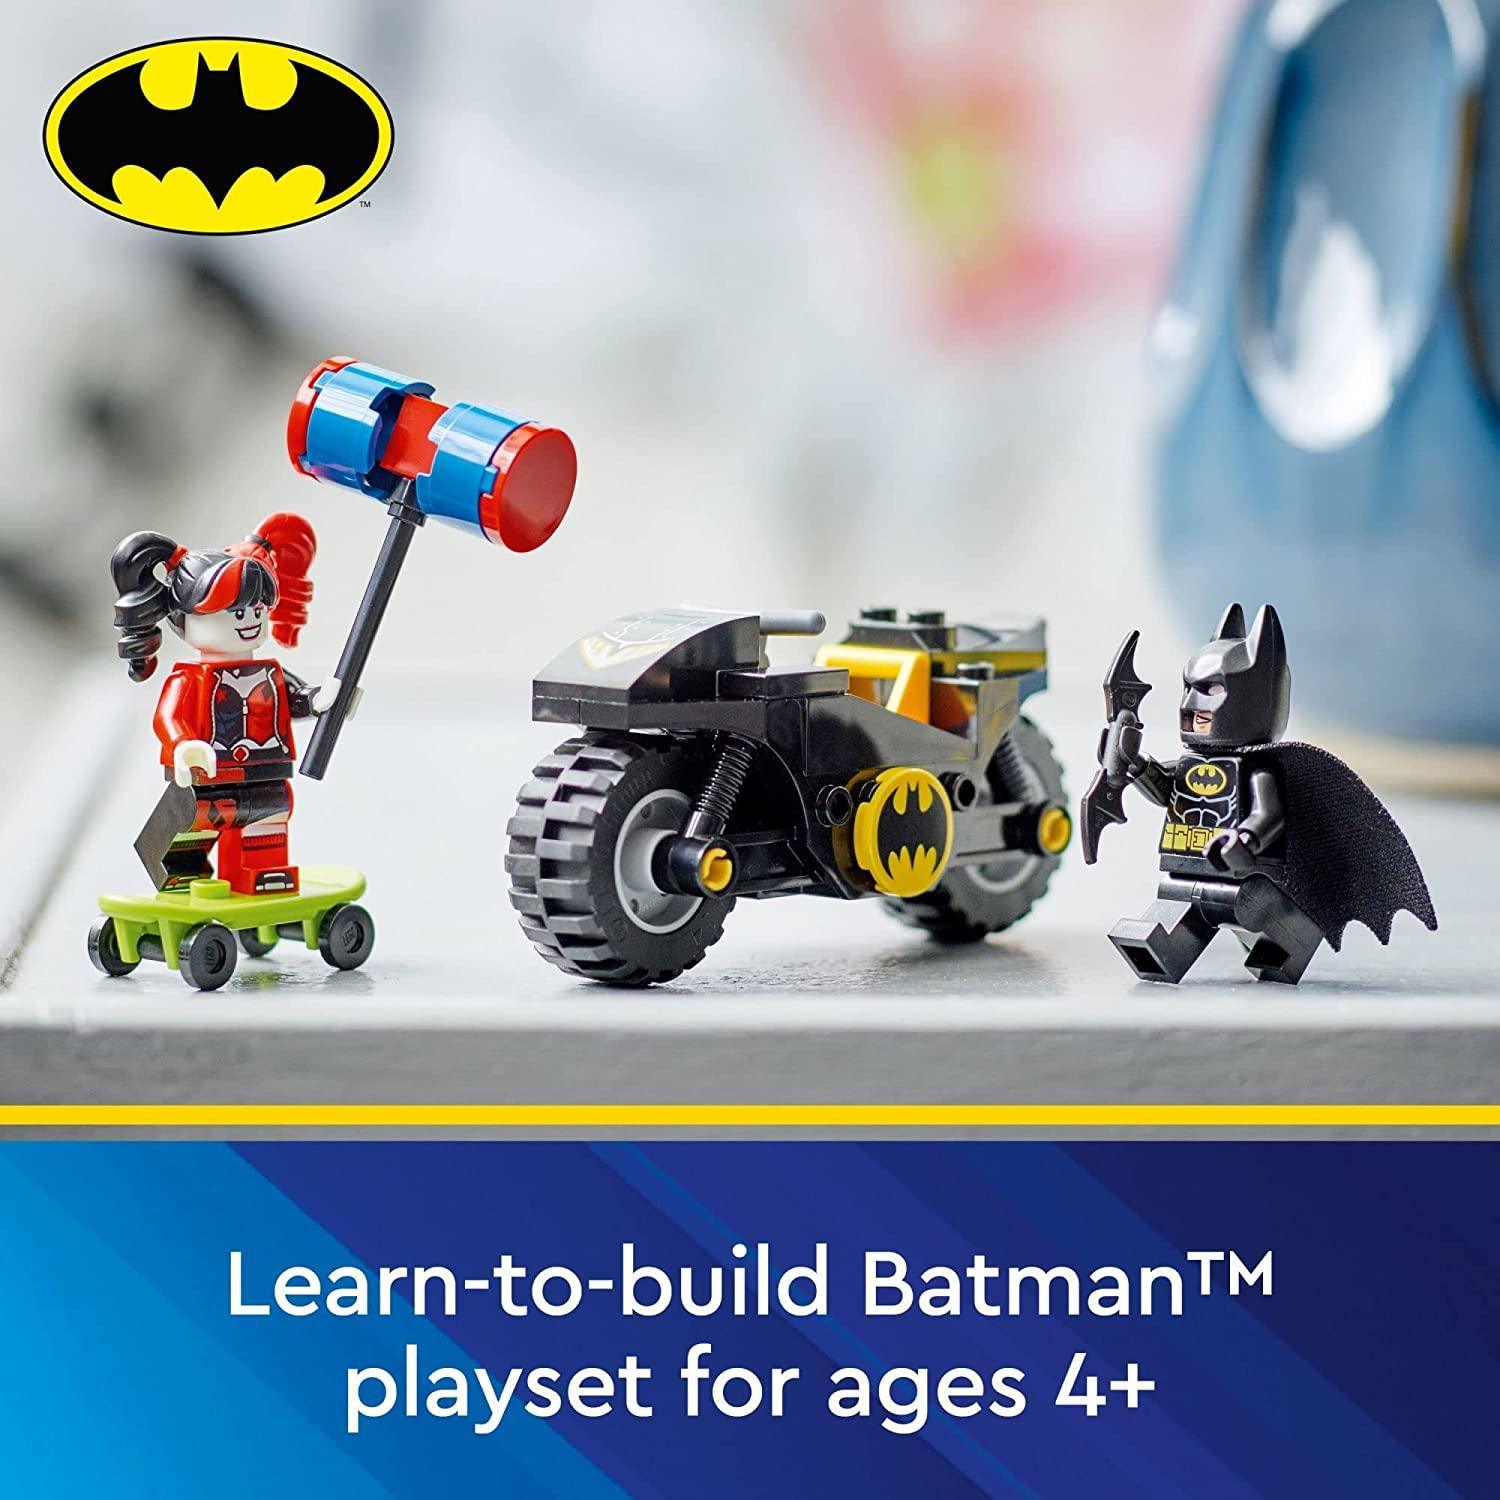 LEGO 76220 DC Super Heroes Batman Versus Harley Quinn Building Toy (42 Pieces) - BumbleToys - 5-7 Years, Batman, Boys, DC, Joker, LEGO, OXE